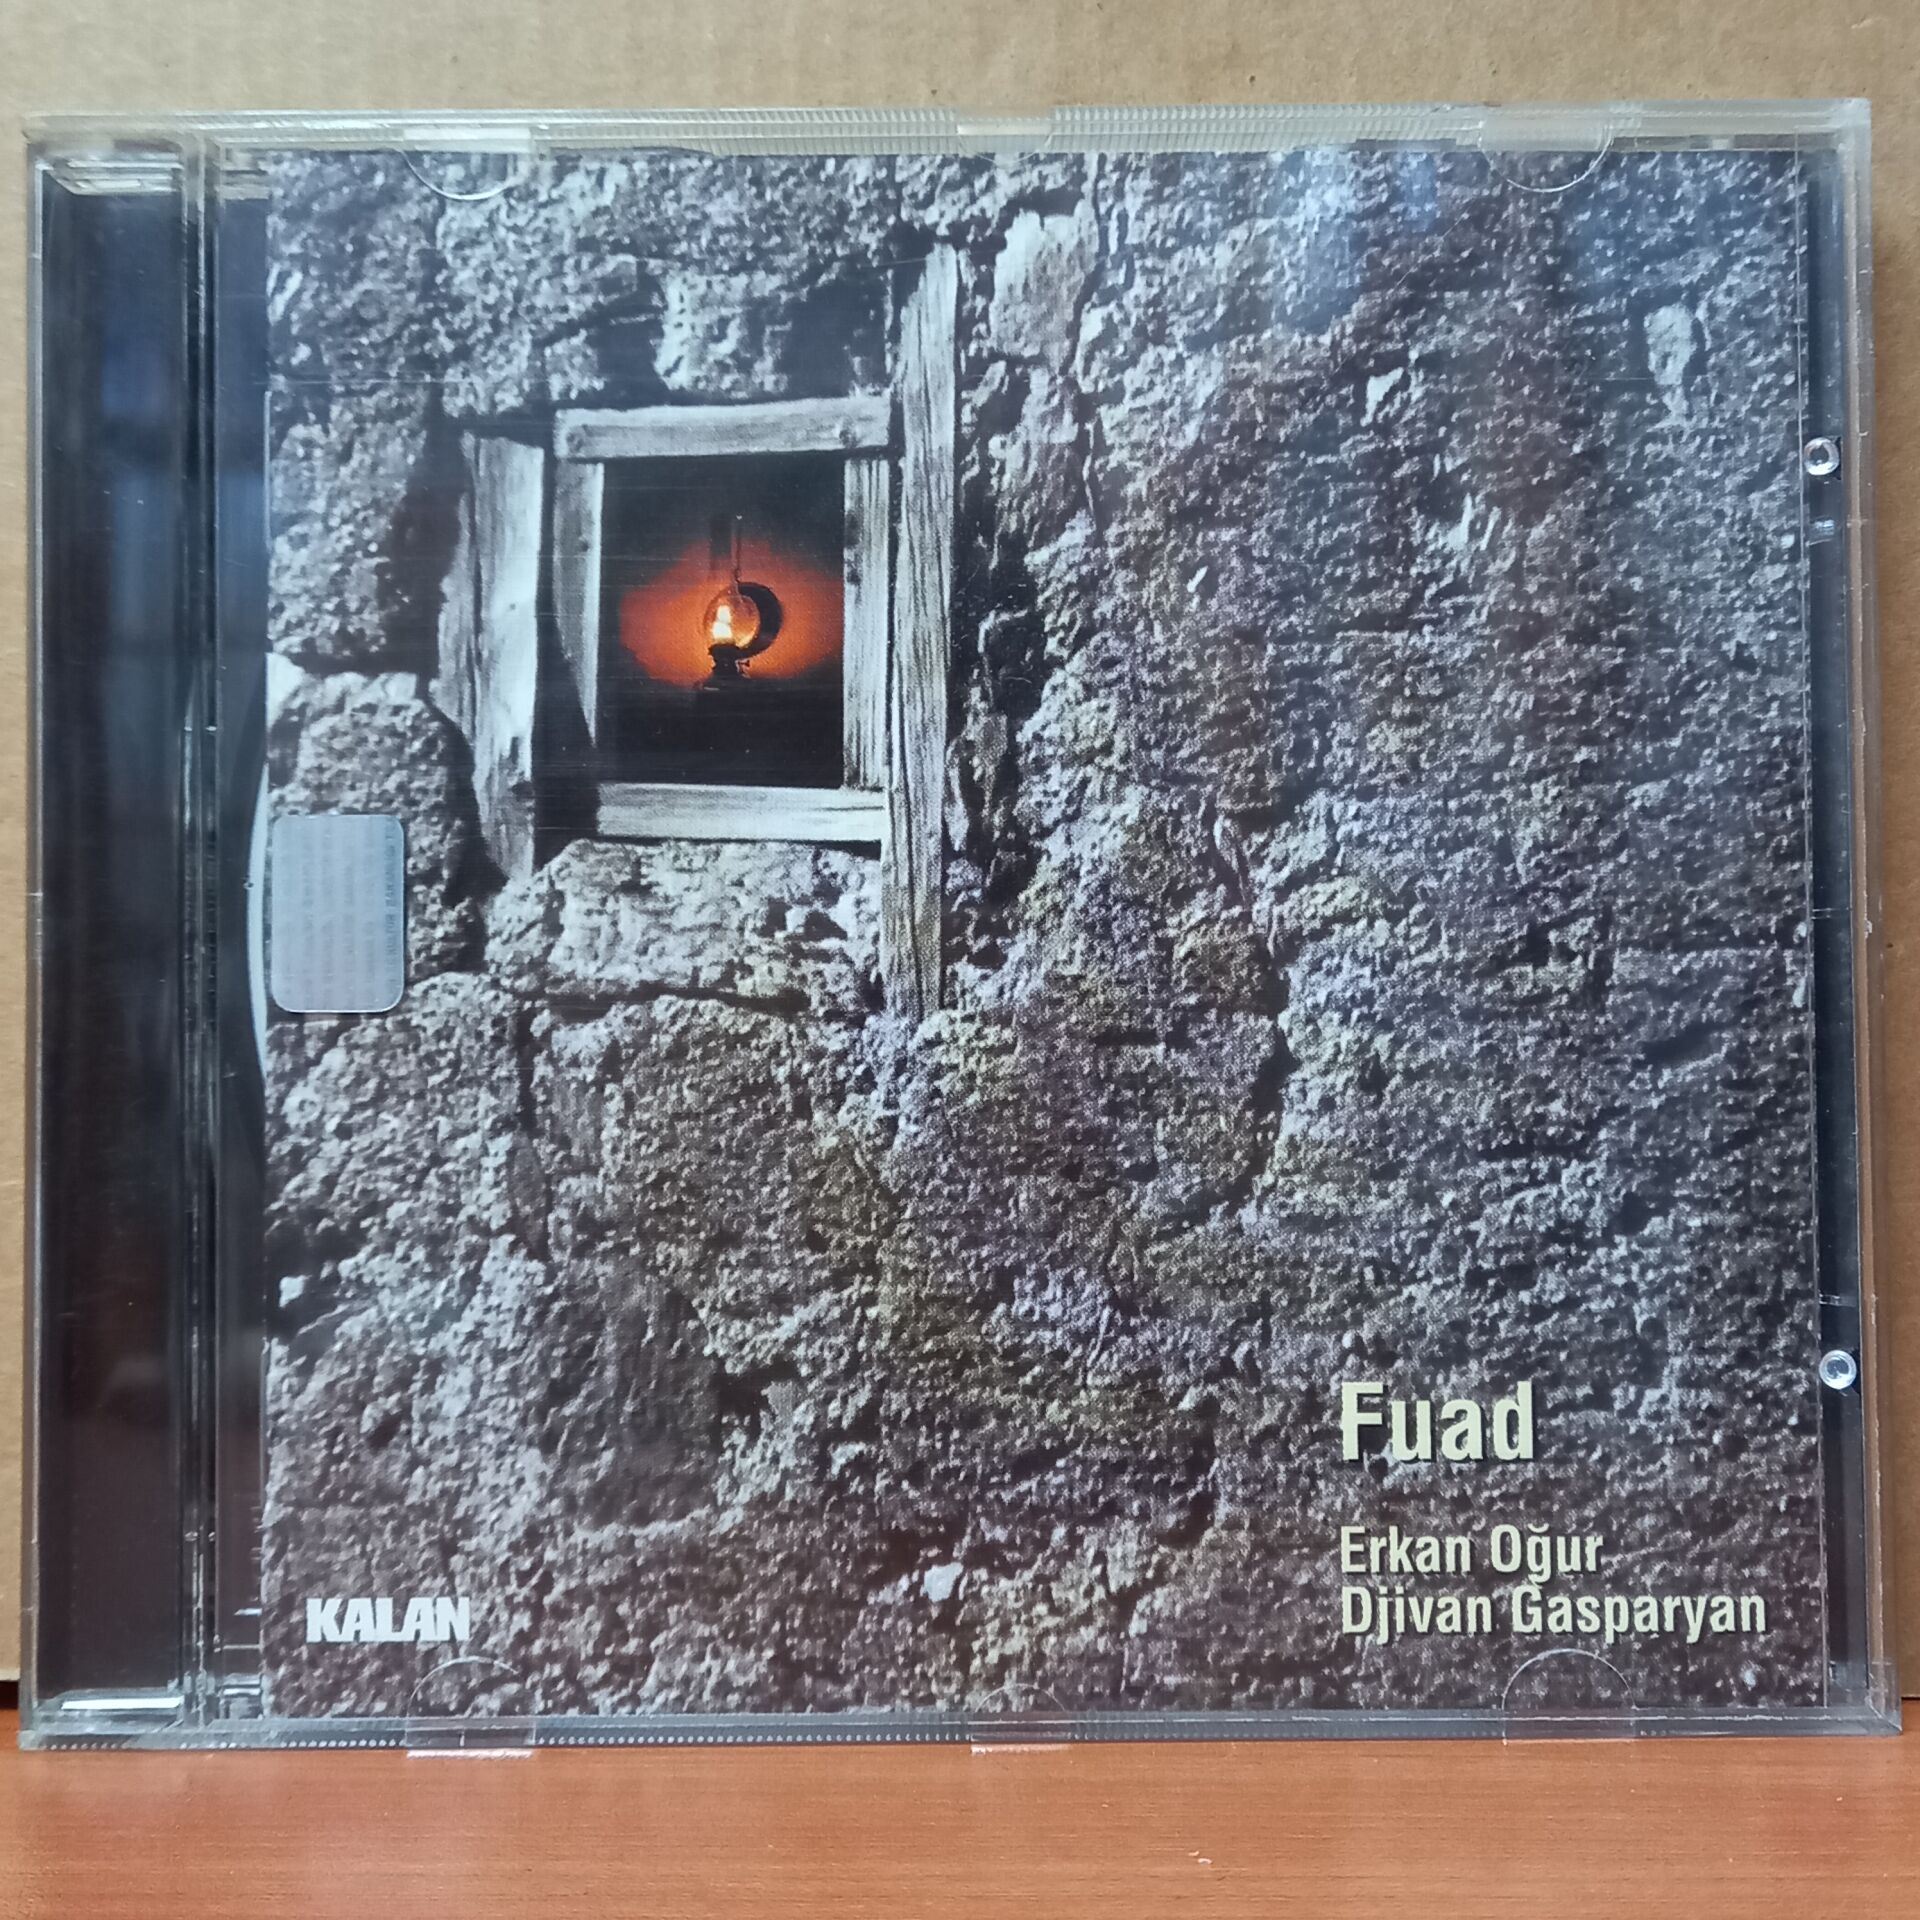 ERKAN OĞUR, DJIVAN GASPARYAN - FUAD (2001) - CD 2.EL